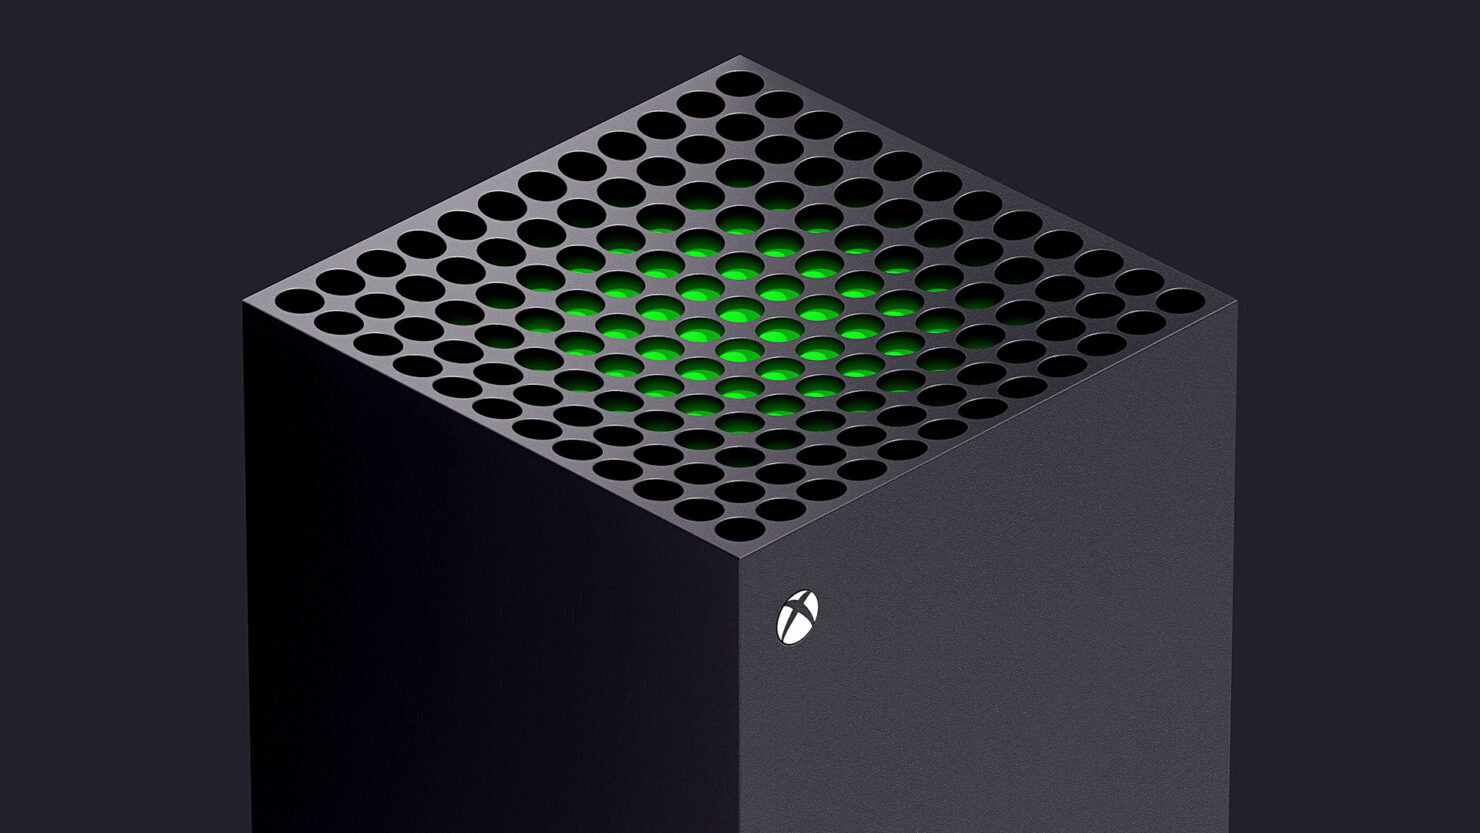 В Европе нашли намеки на скорый выход консоли Xbox Series X без дисковода